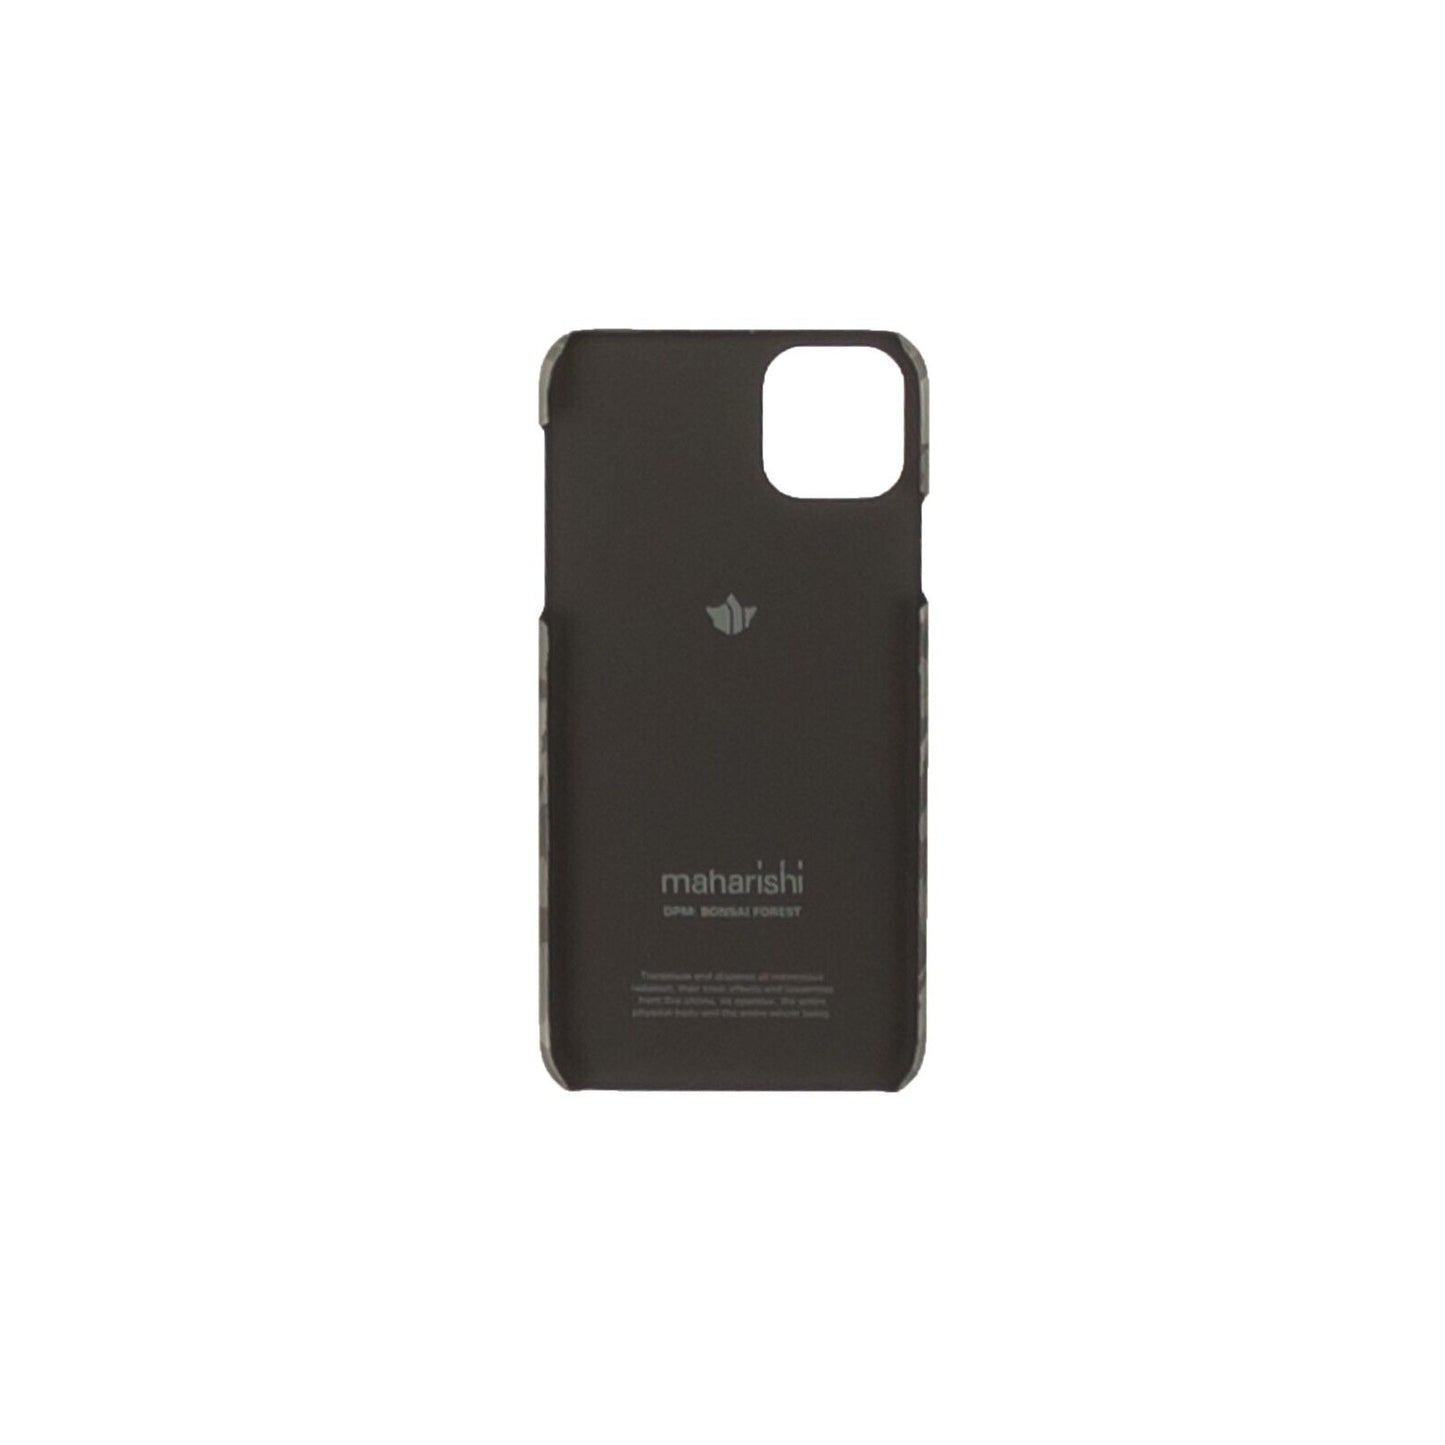 Maharishi Iphone 11 Pro Max Phone Case Knight - Gray